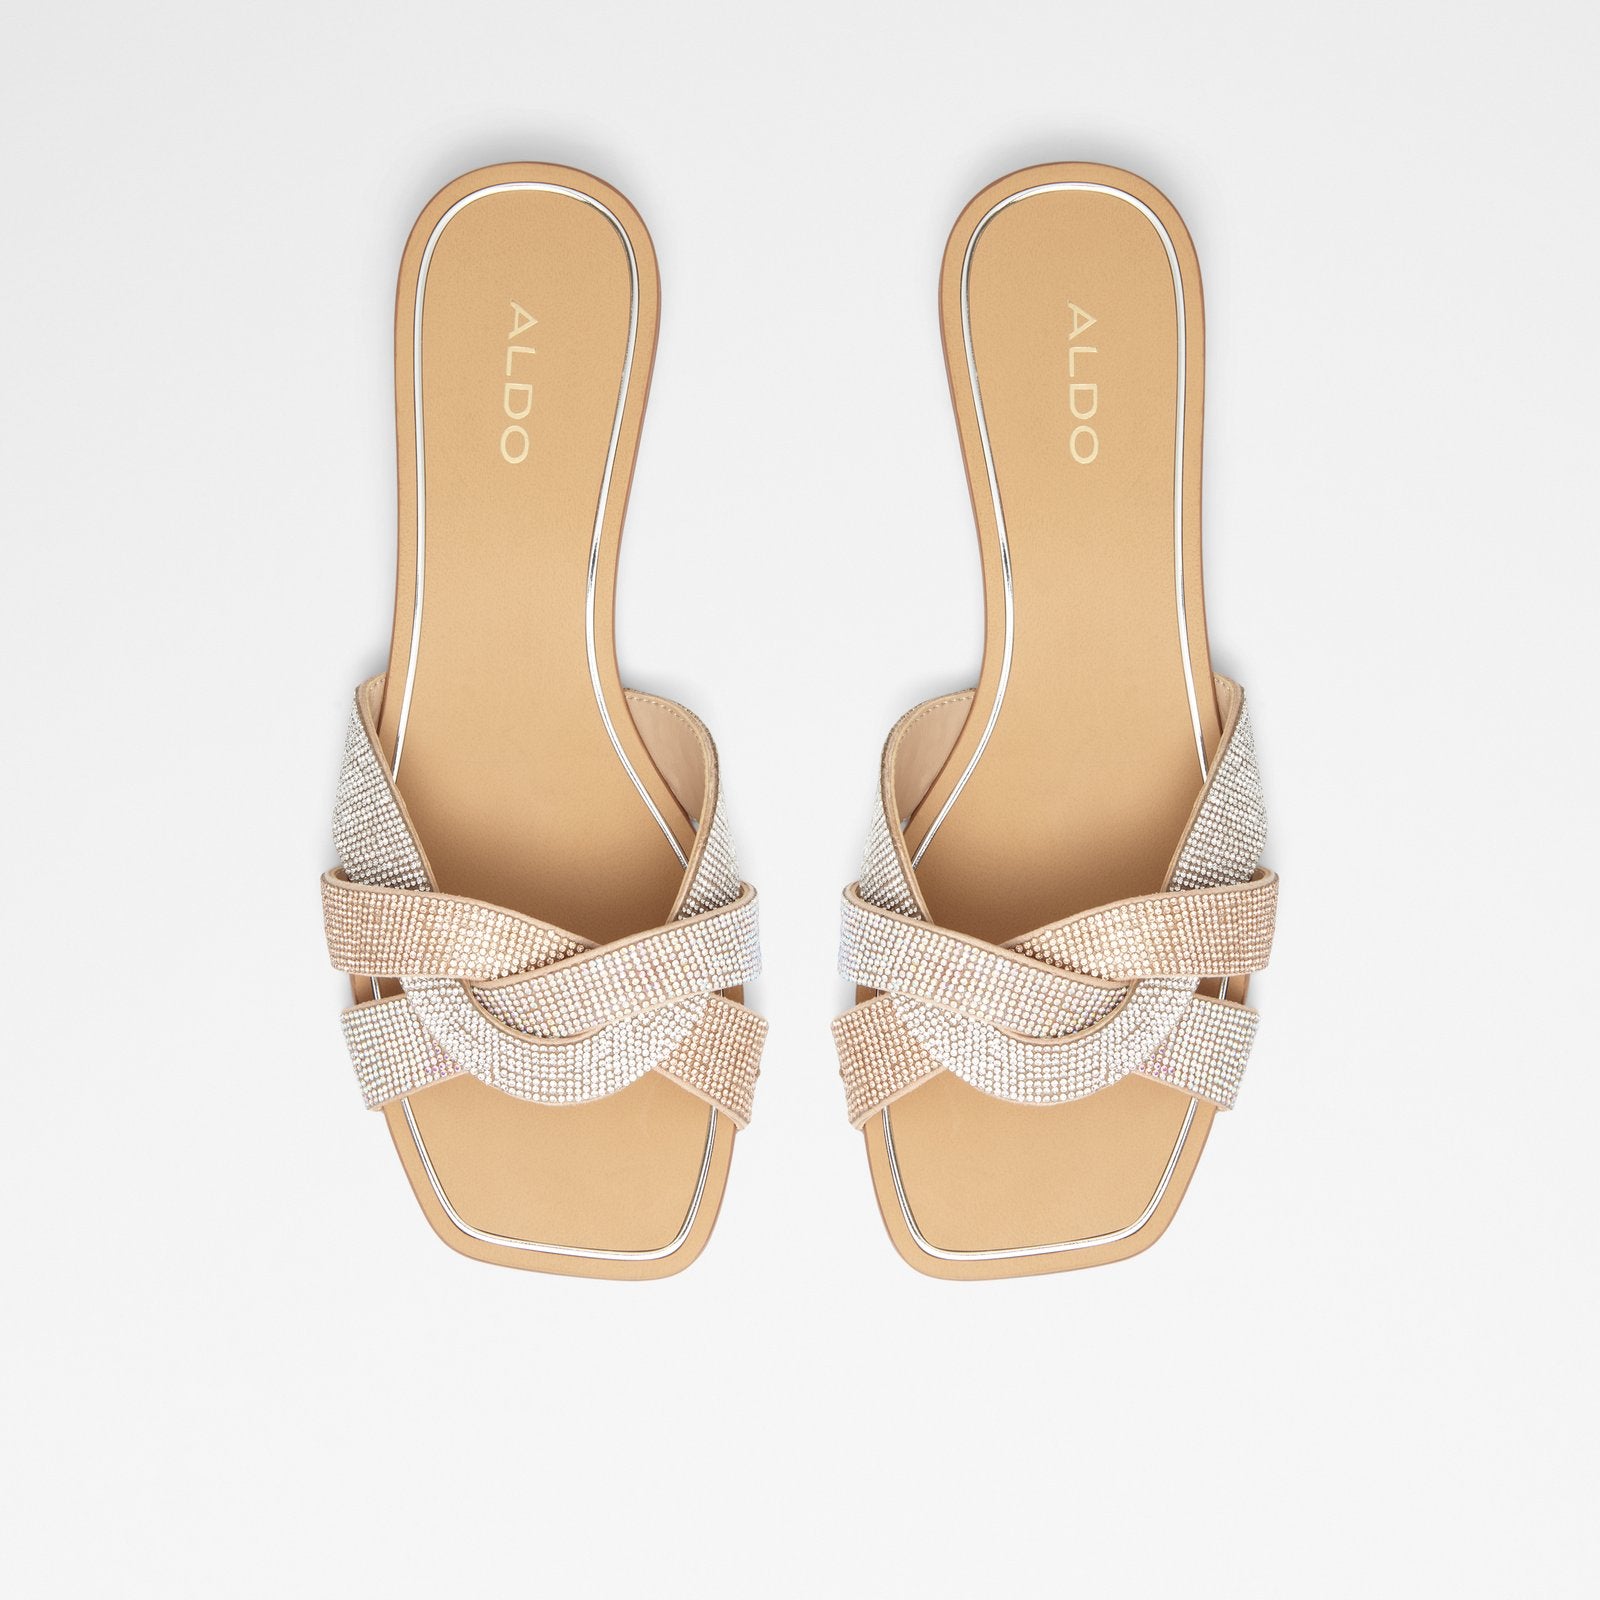 Coredith / Occasion Women Shoes - Bone - ALDO KSA